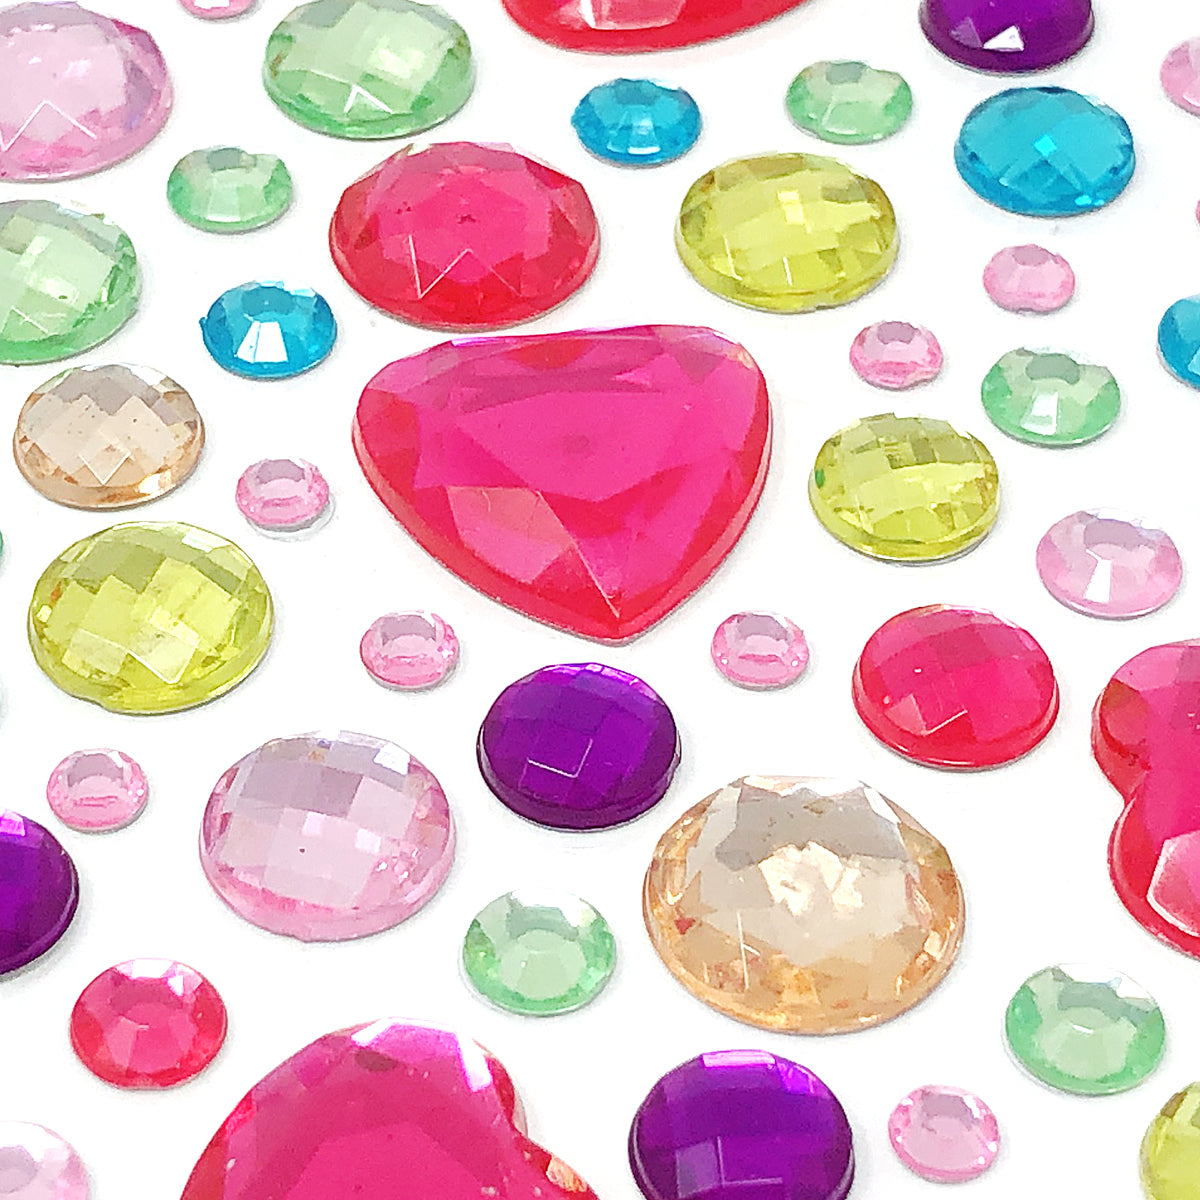 Wrapables Acrylic Self Adhesive Crystal Rhinestone Gem Stickers, Jewel Multicolor